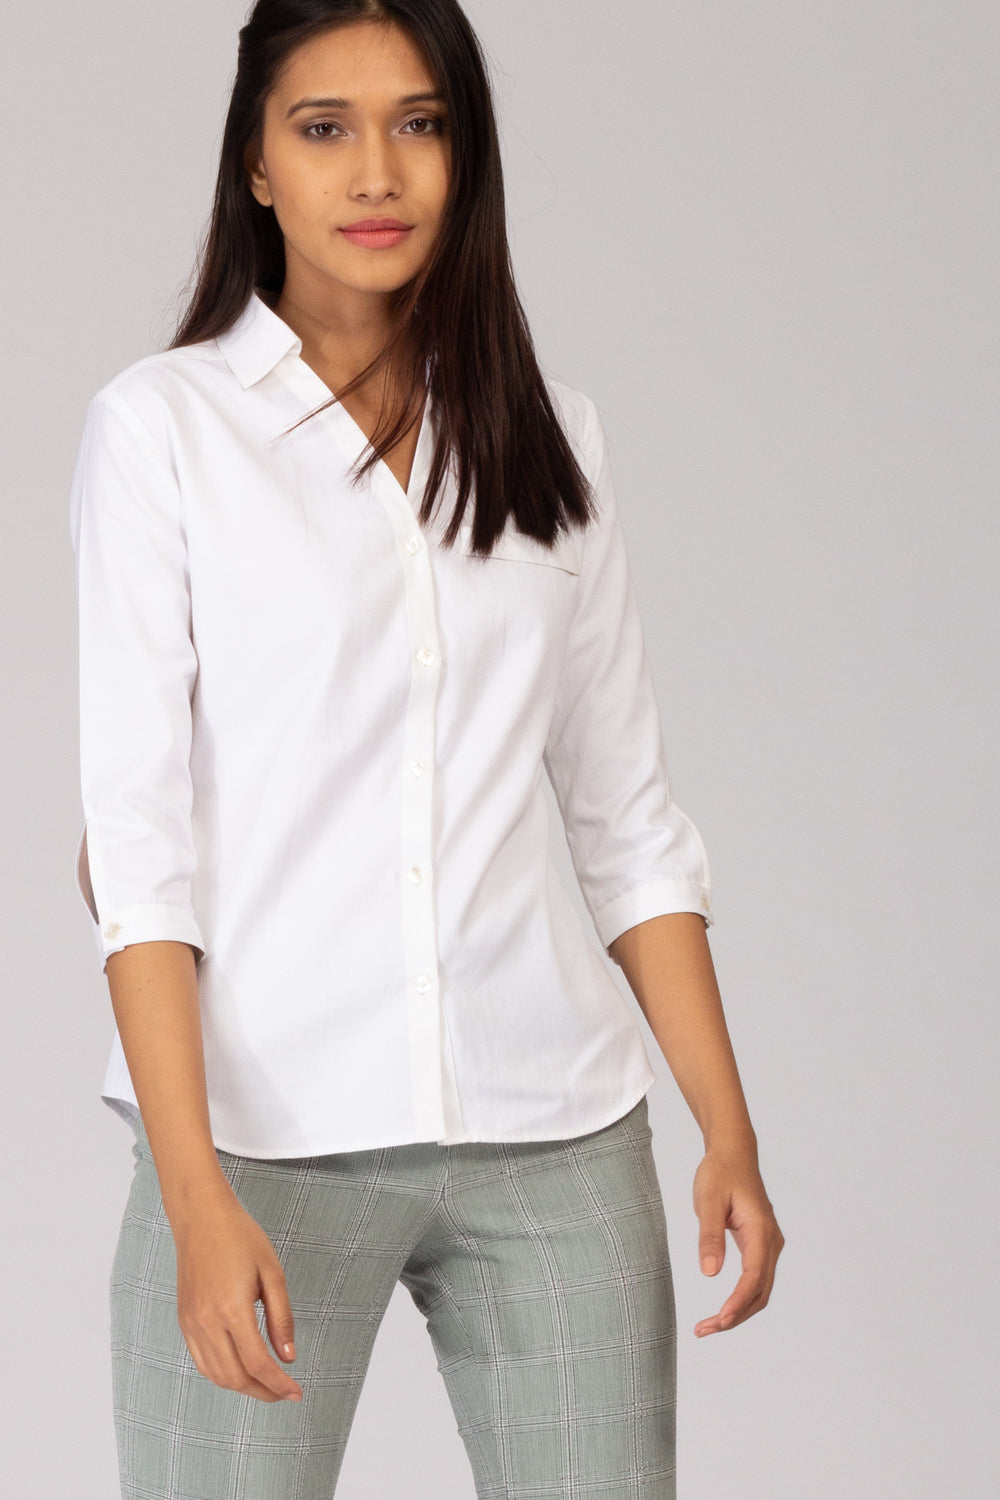 White Officewear Top | Intermod Workwear